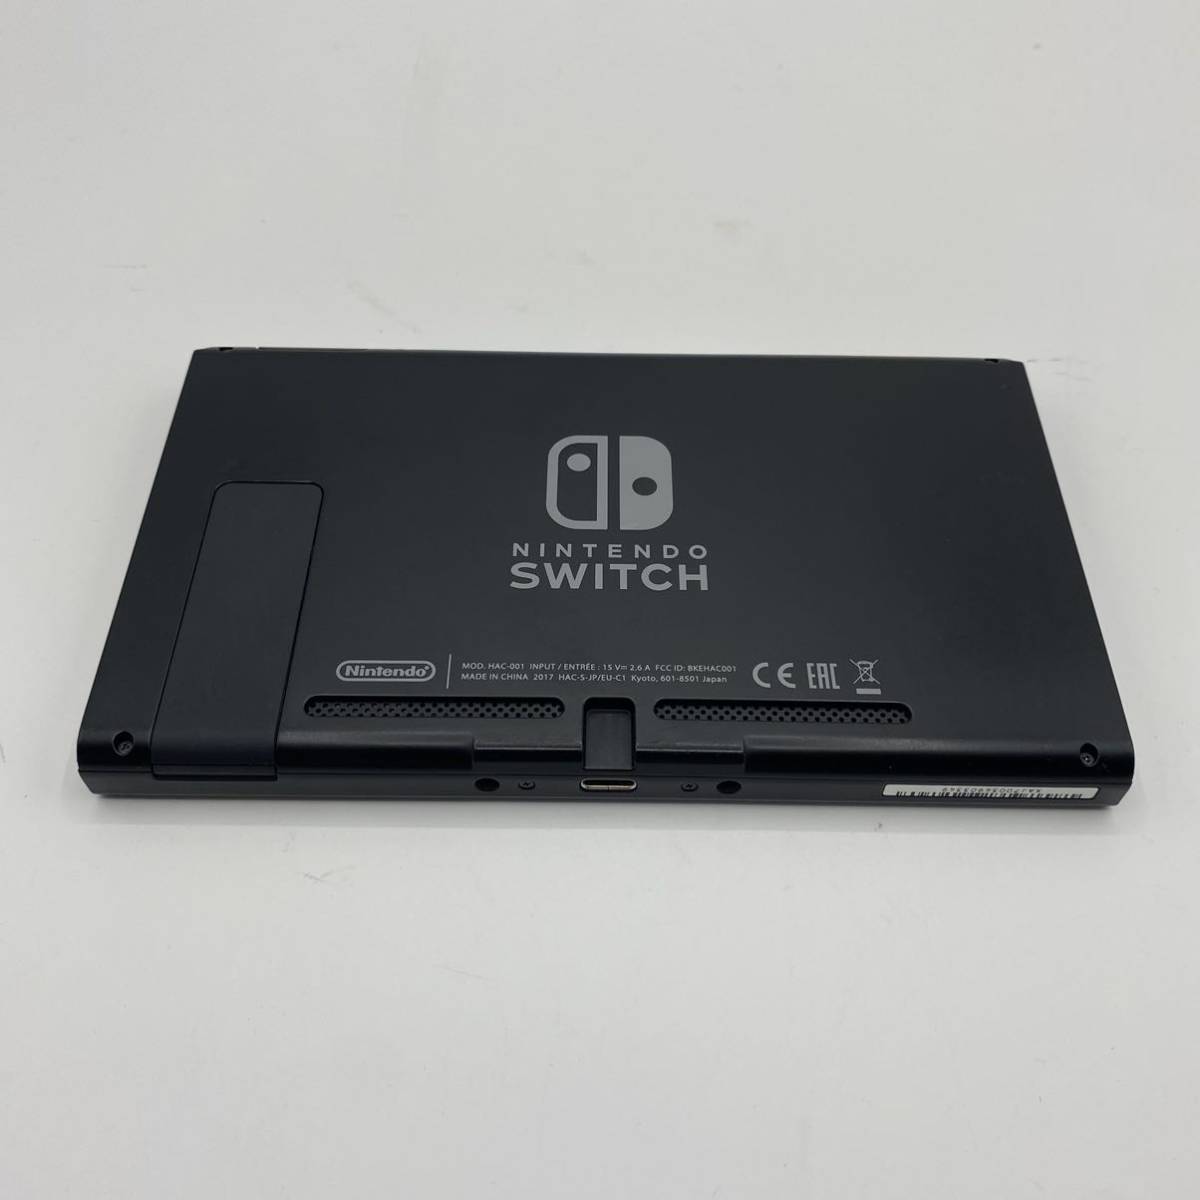 期間限定の激安セール 未対策機 Nintendo Switch 本体 液晶 旧型 2017